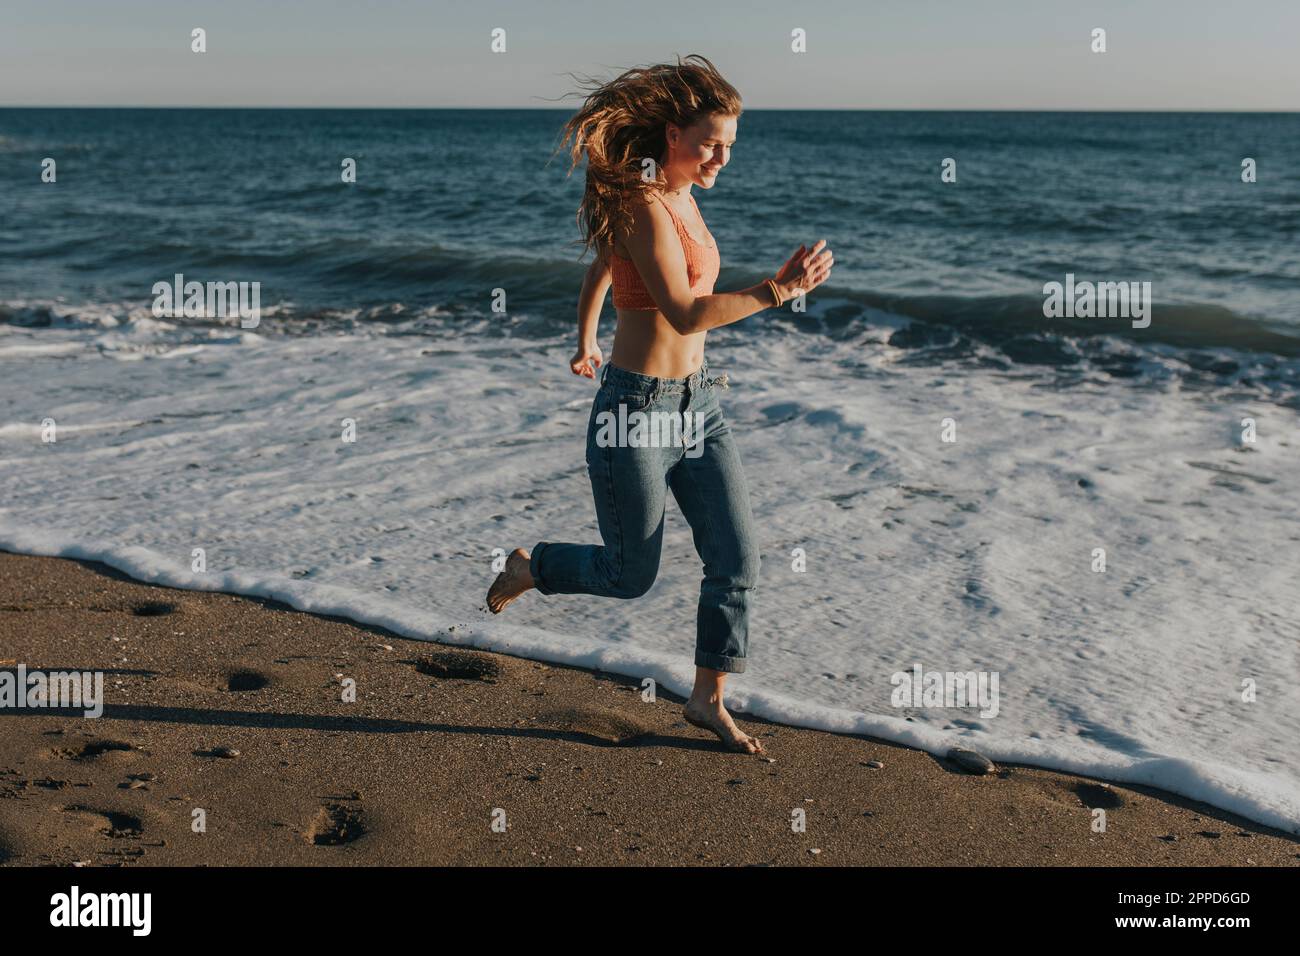 Happy woman running and enjoying at beach Stock Photo